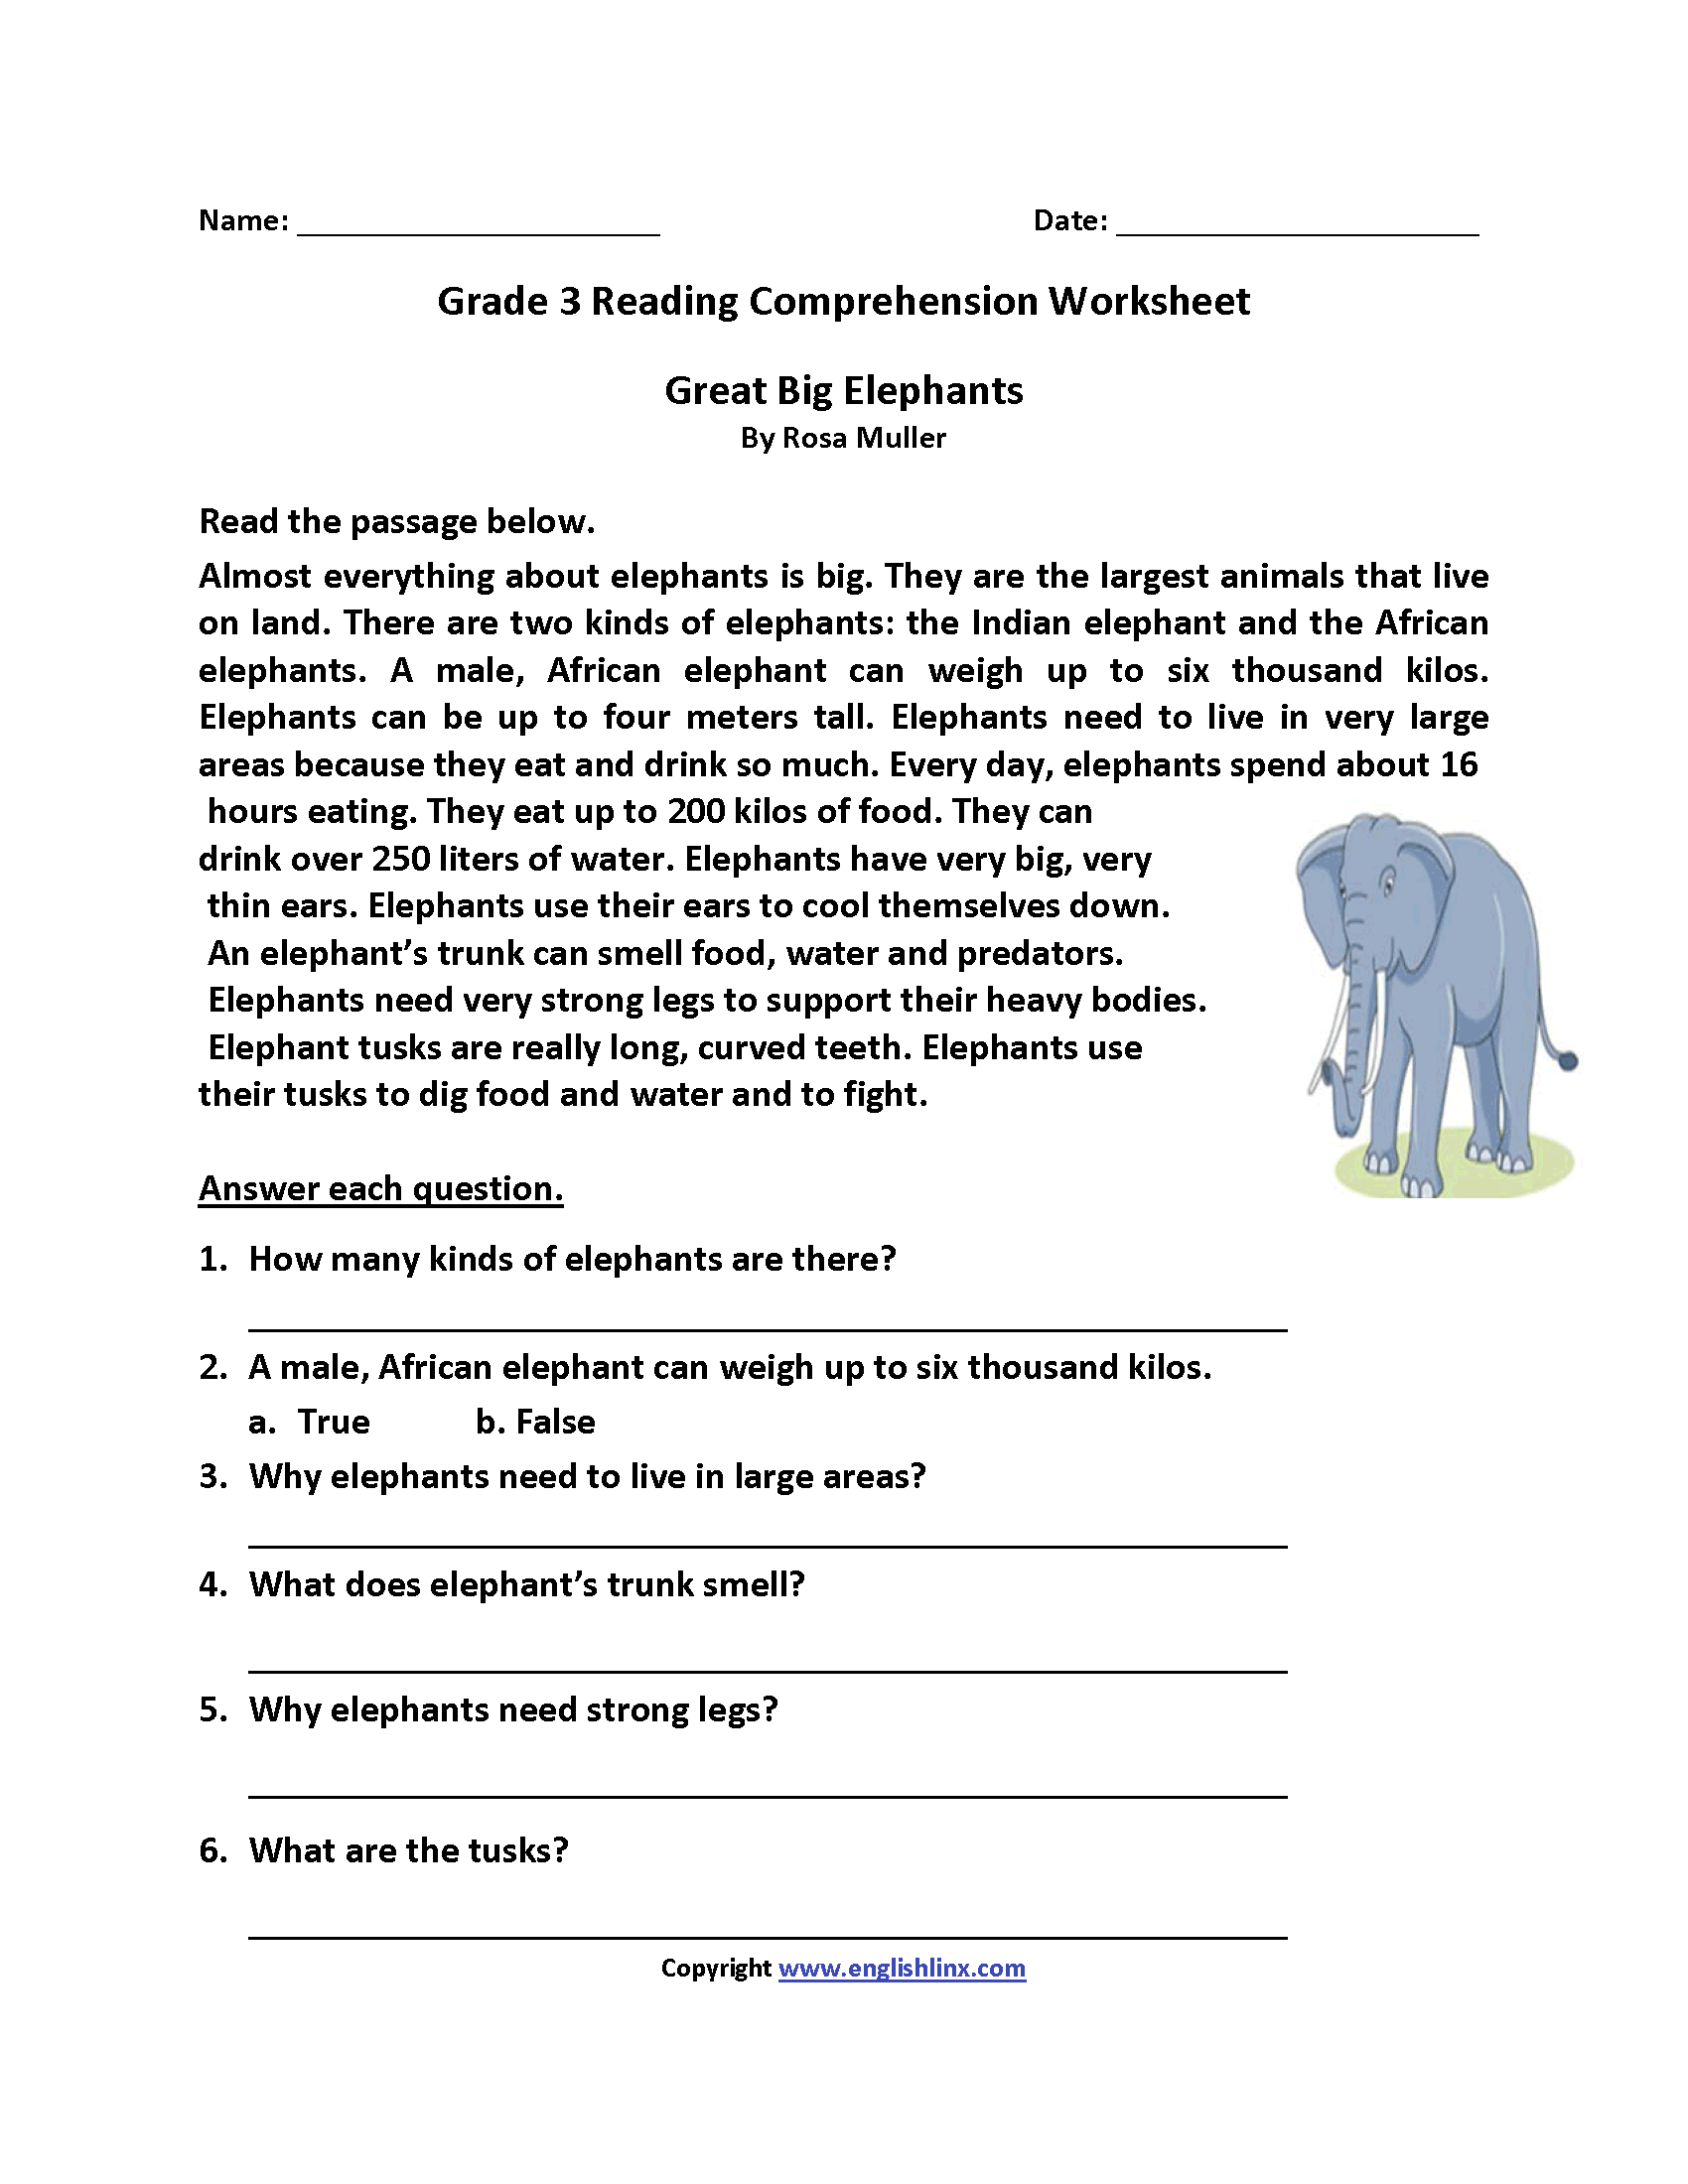 Great Big Elephants Third Grade Reading Worksheets